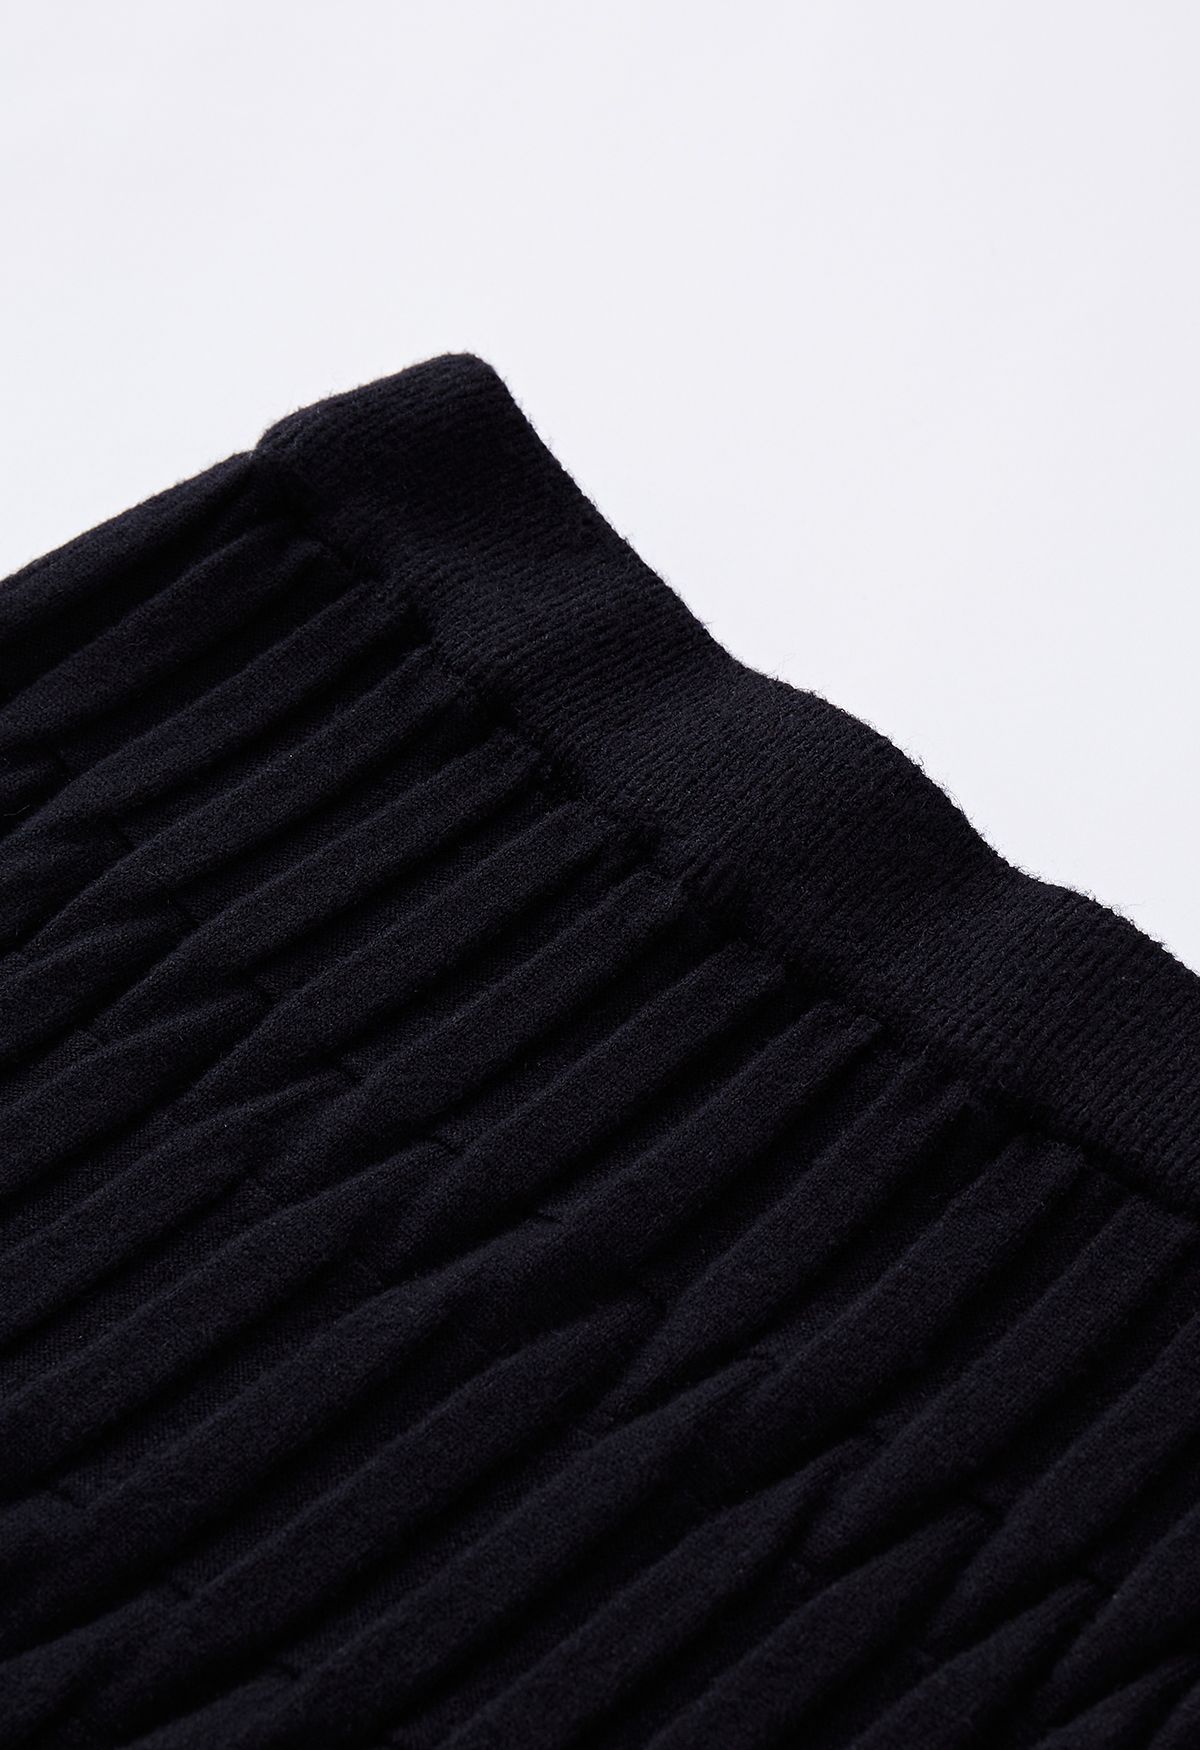 Jupe crayon en tricot texturé en relief en noir